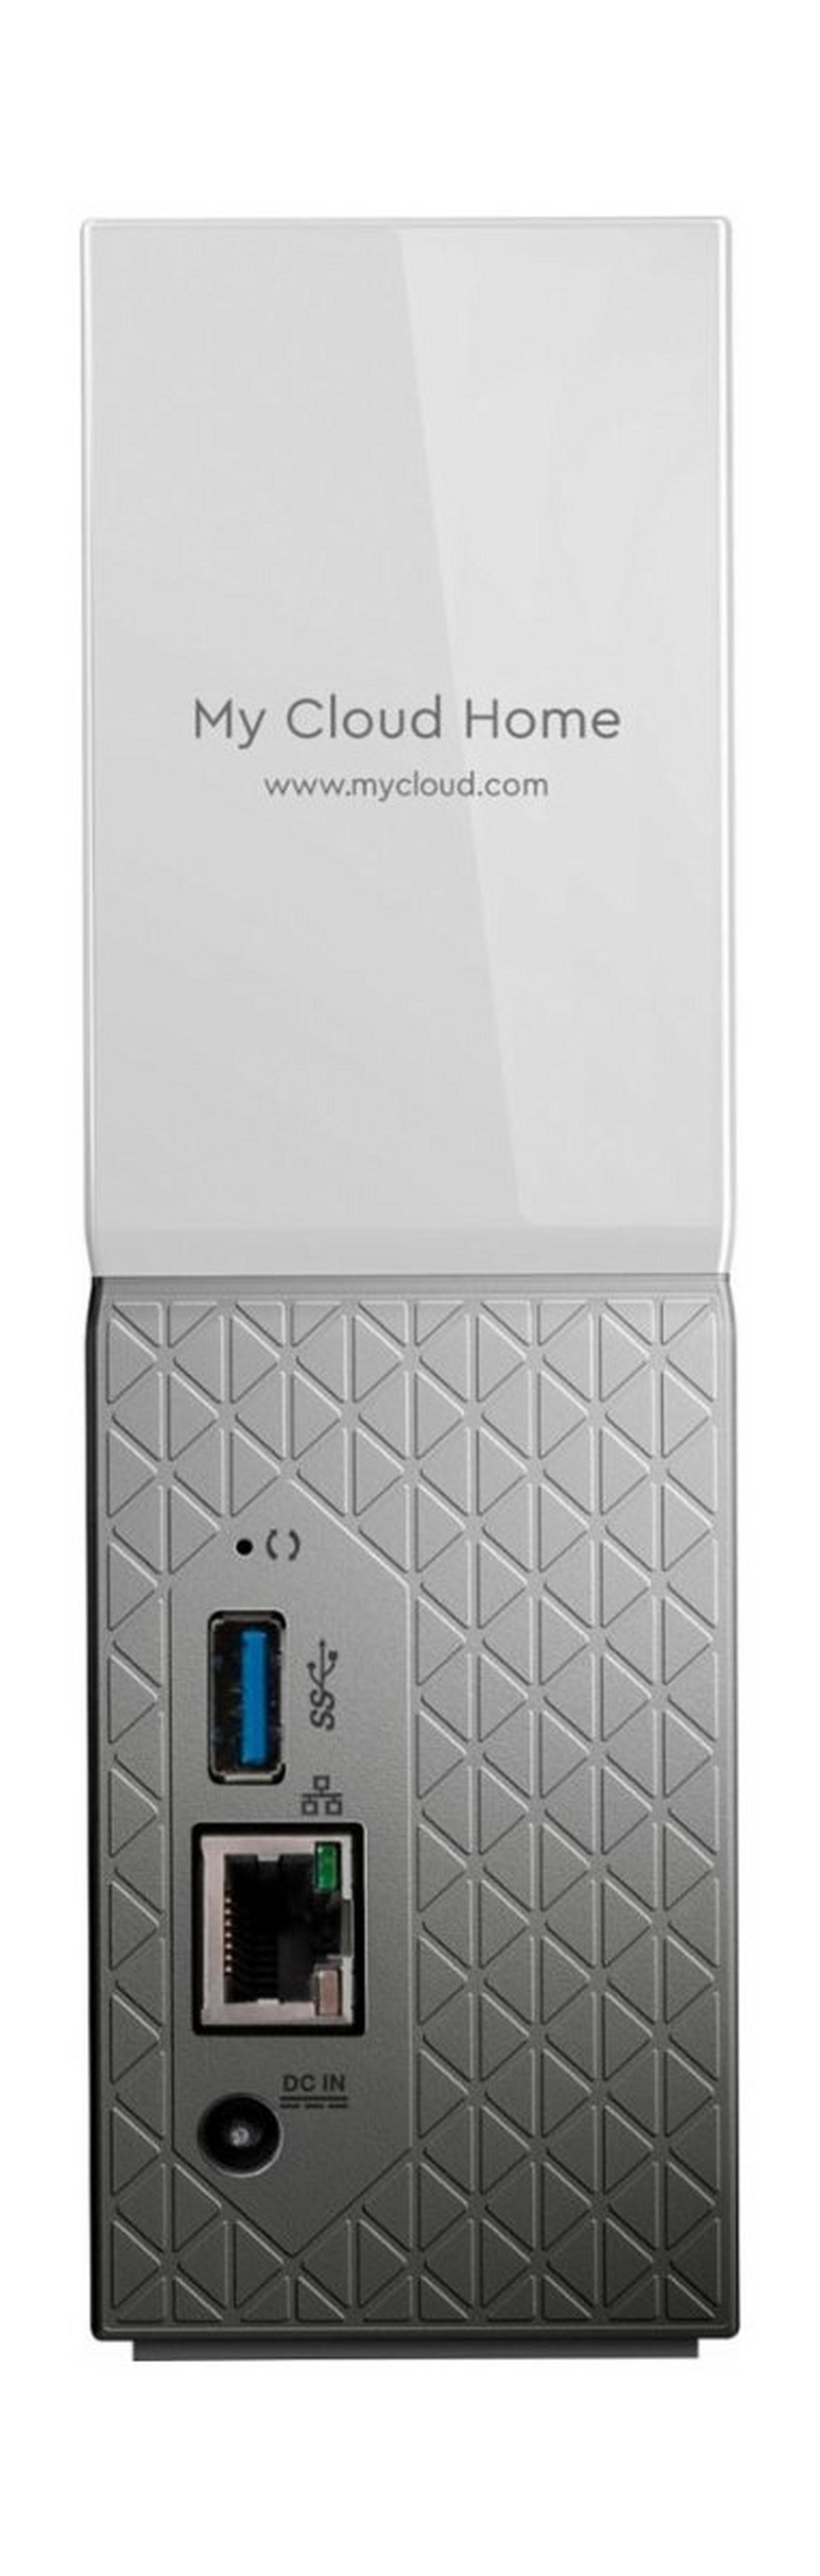 Western Digital 8TB MyCloud Home Hard Drive (WDBVXC0080HWT) - White